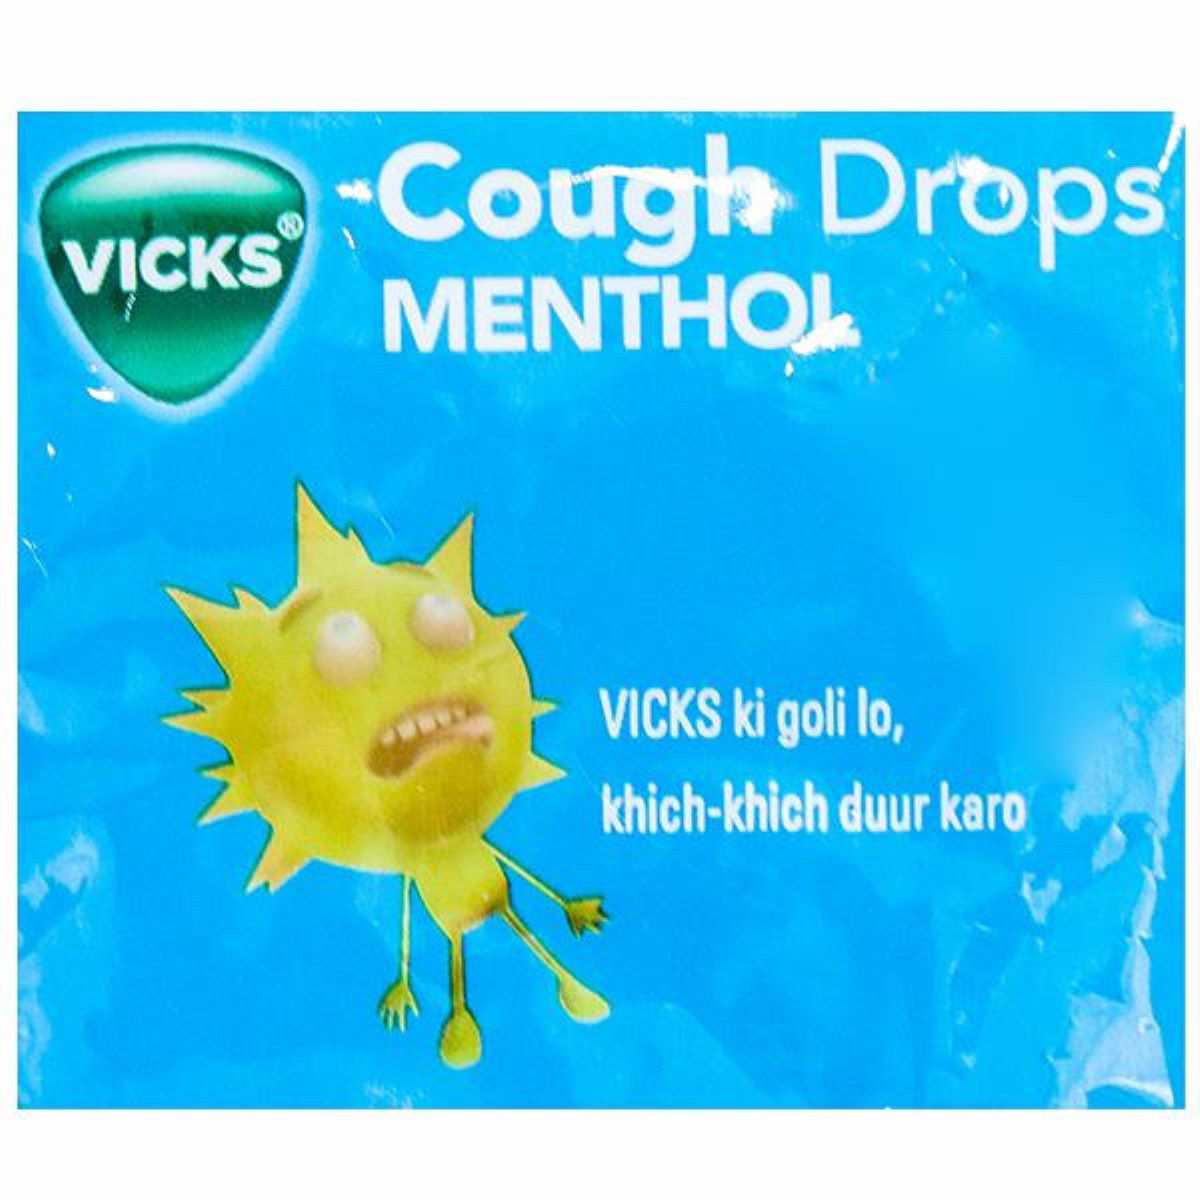 Vicks Menthol Cough Drops, 20 Count, Pack of 1 